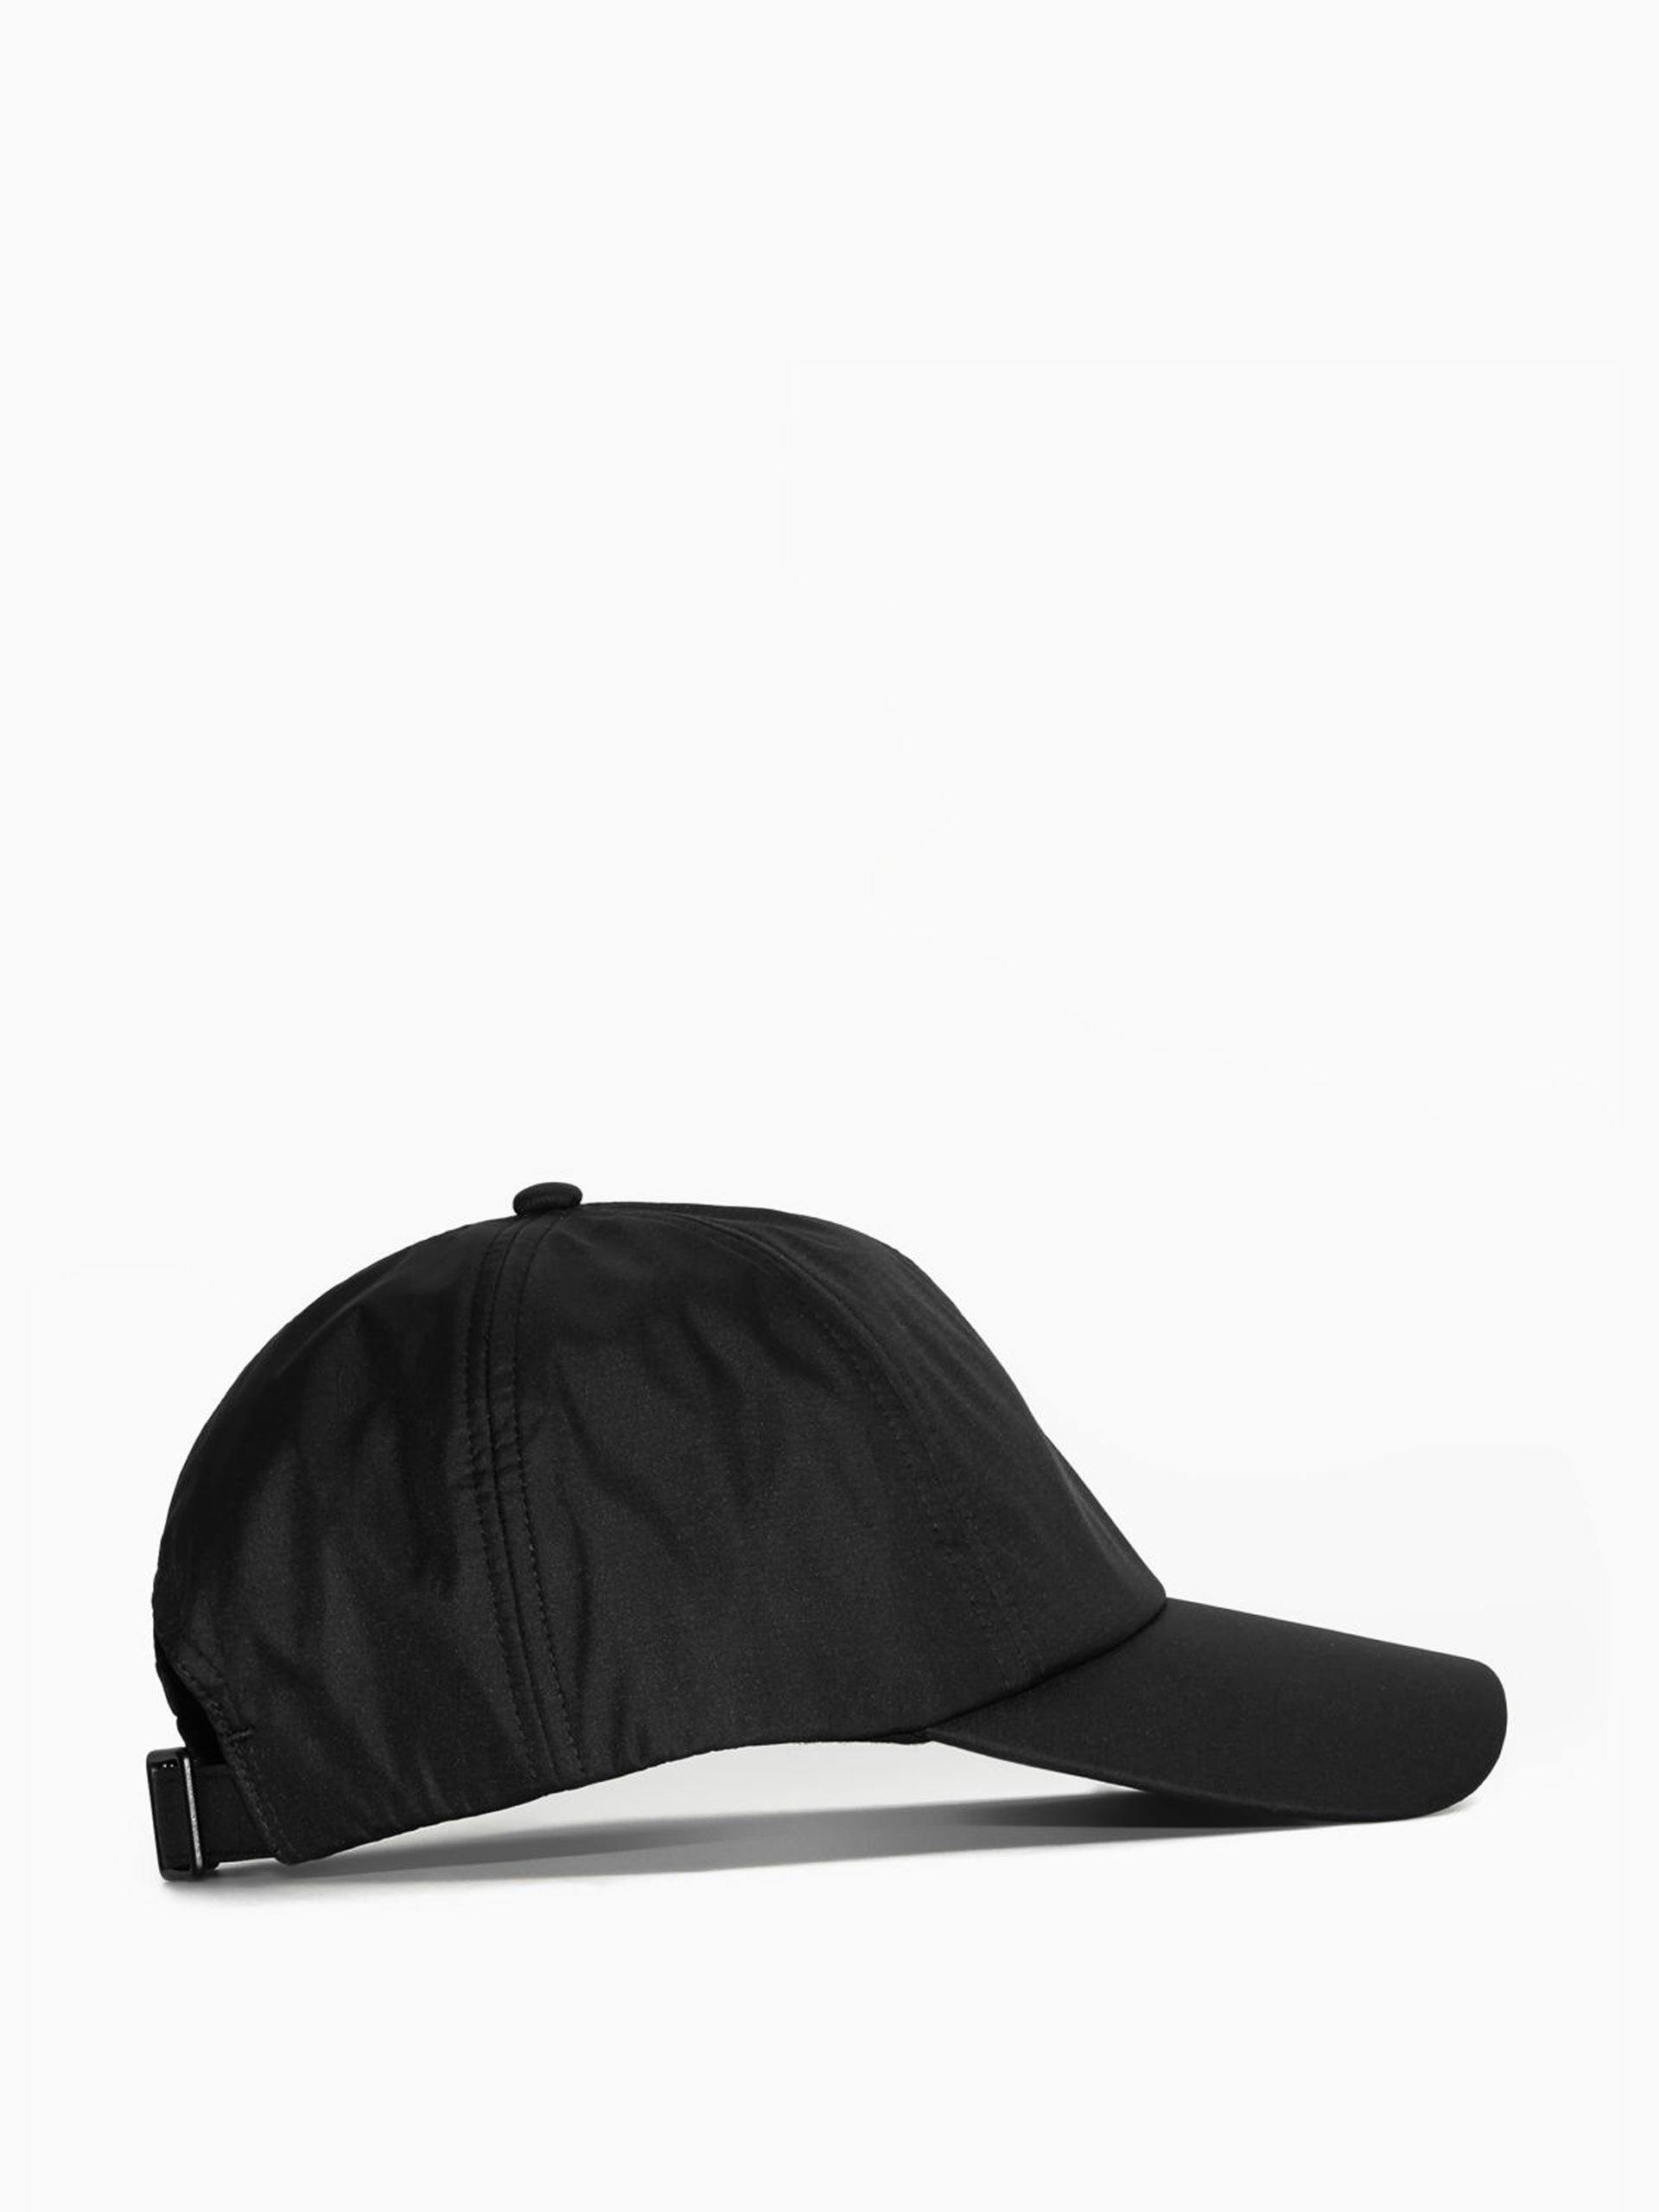 Shell baseball cap